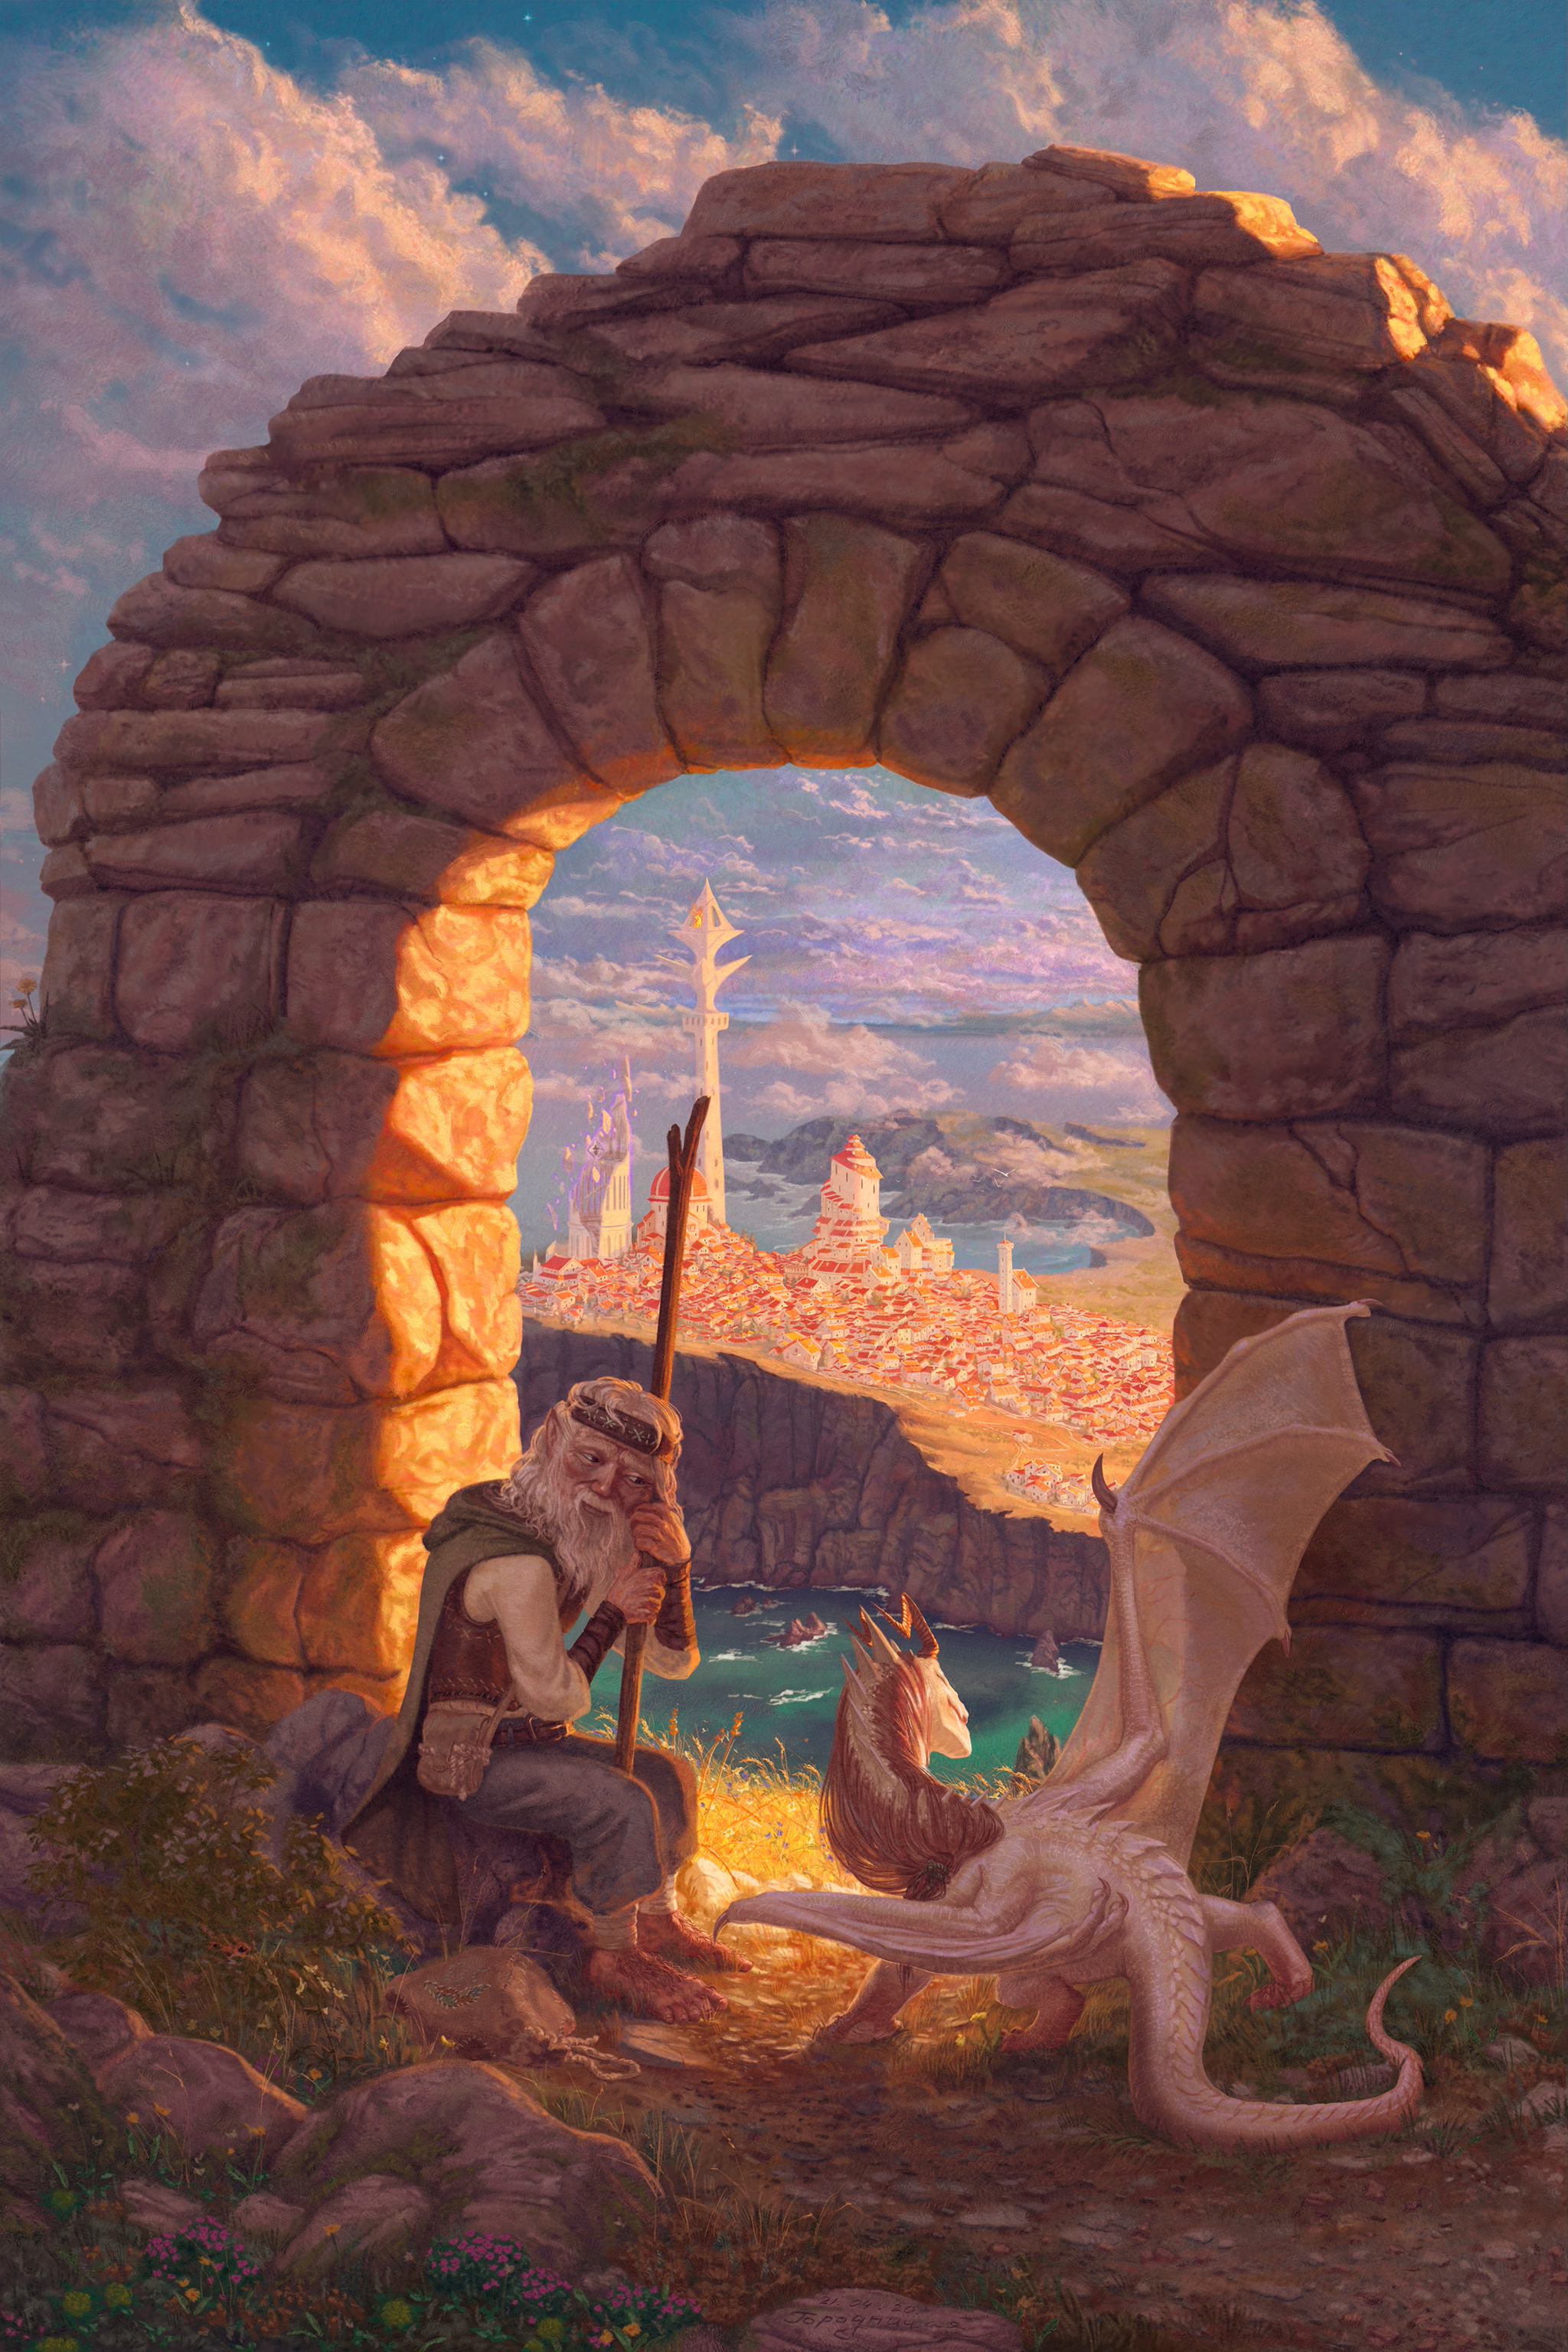 Window to a warm world - My, Fantasy, The Dragon, The hobbit, Digital drawing